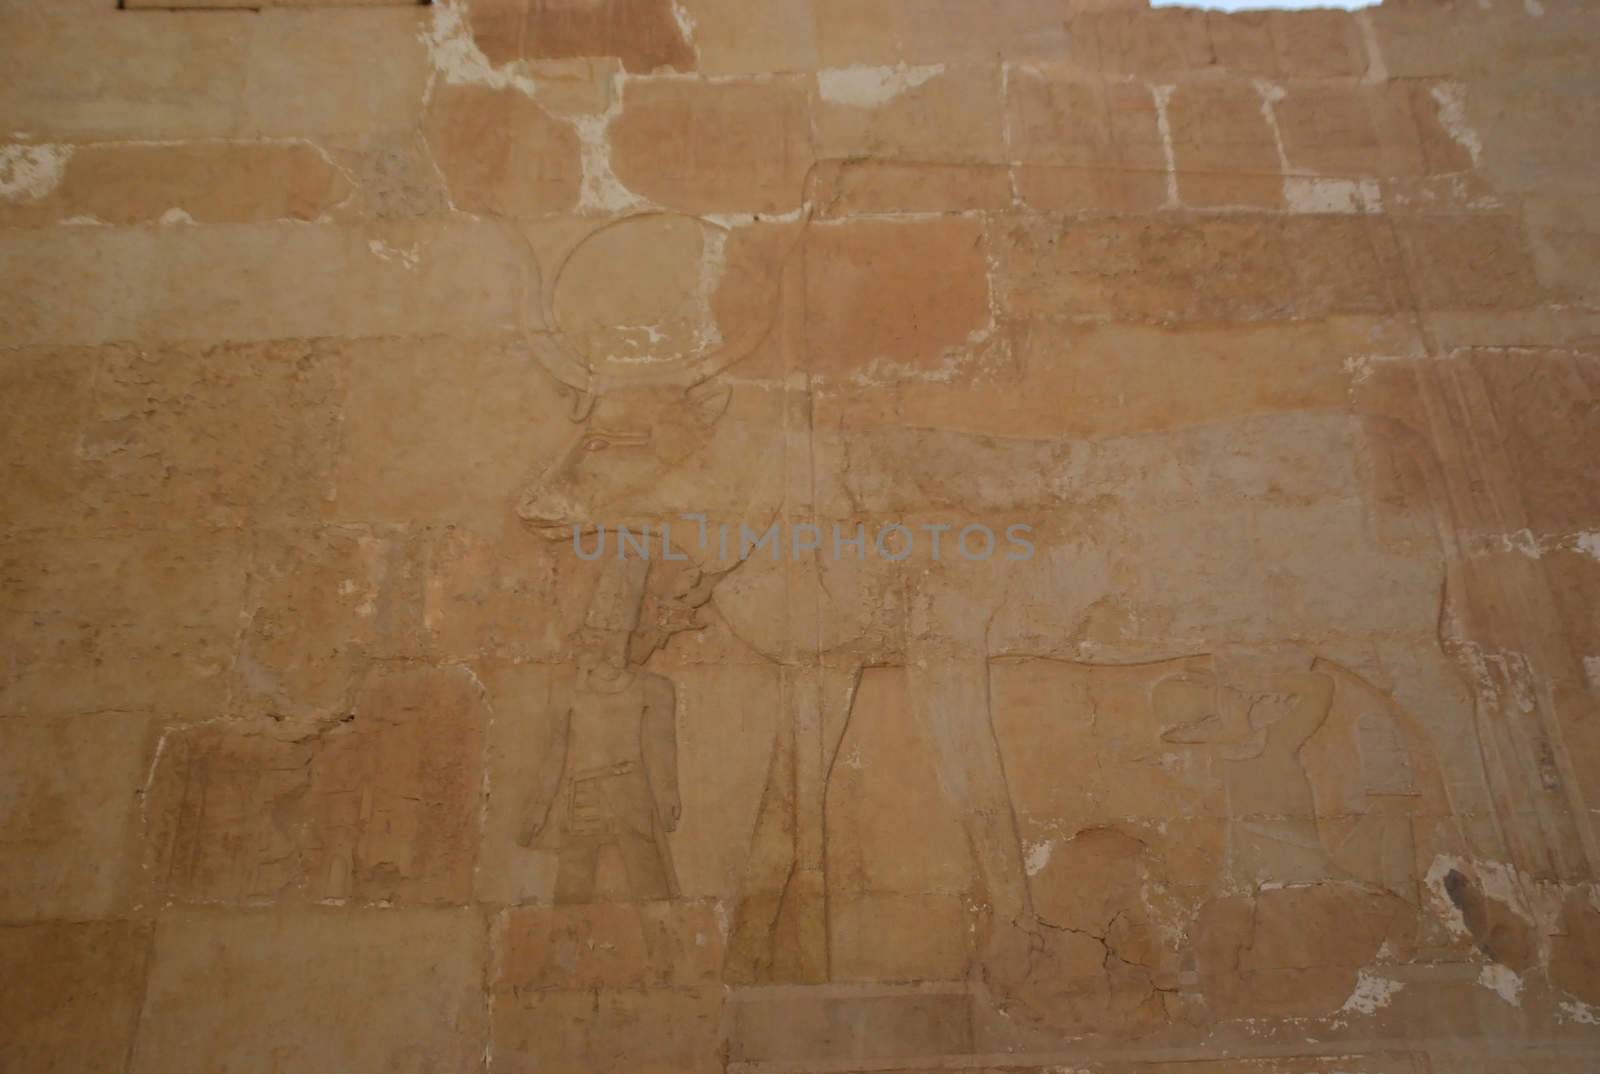 Relief depicting the Goddess Hatshepsut Temple of Hatshepsut at Theban necropolis, Luxor neighborhood, Egypt. The images on the walls of the Temple of Hatshepsut